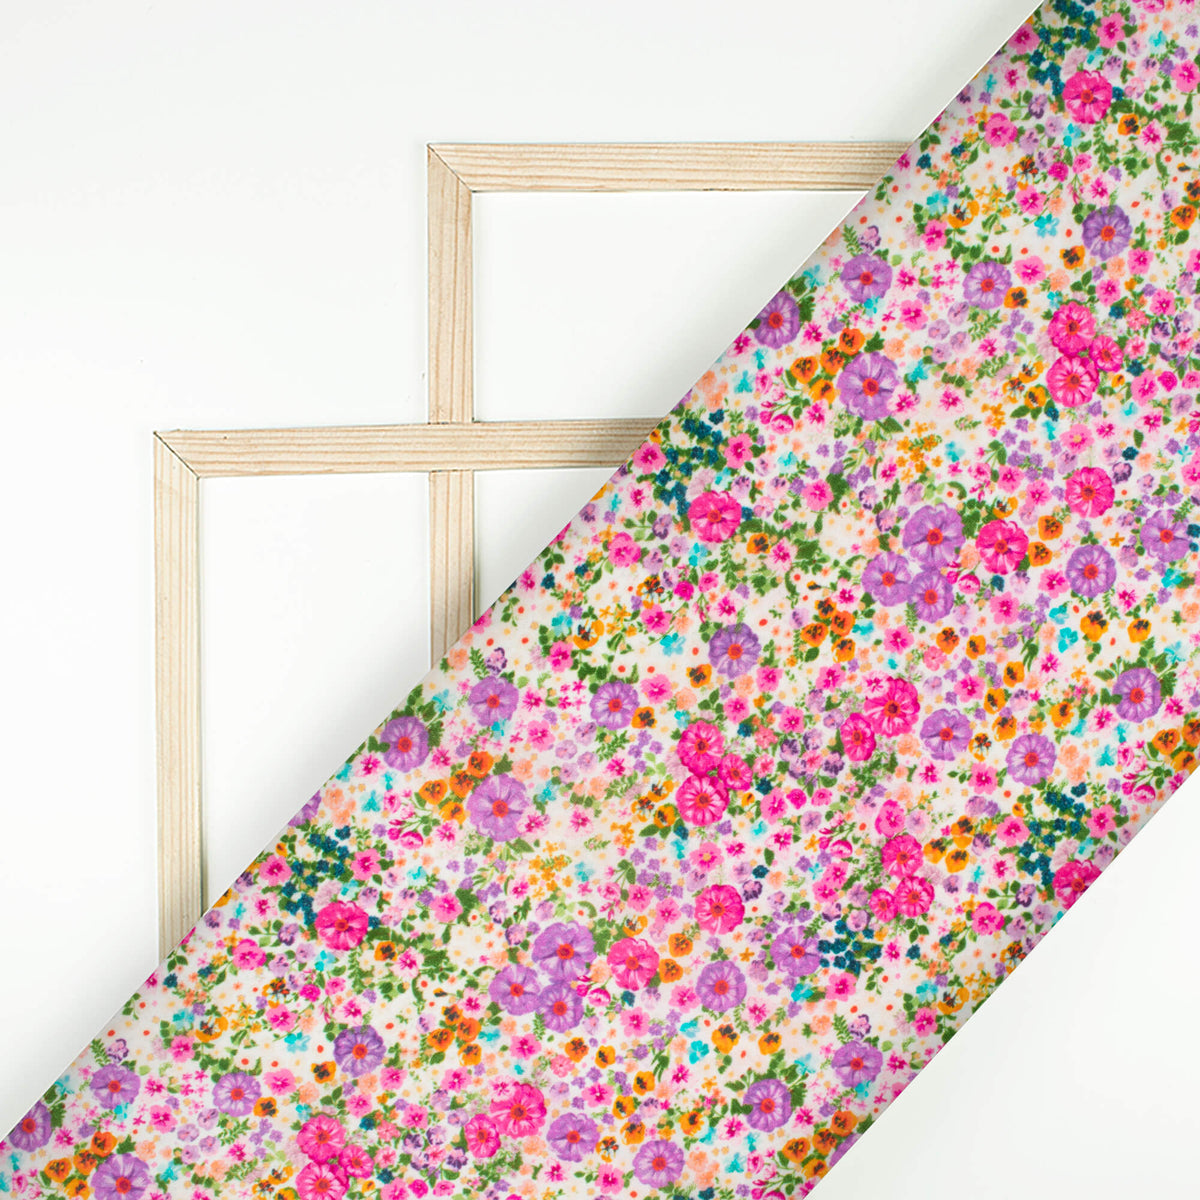 Fabric Stretch Viscose+lurex+silk Floral Pattern On Pink Base